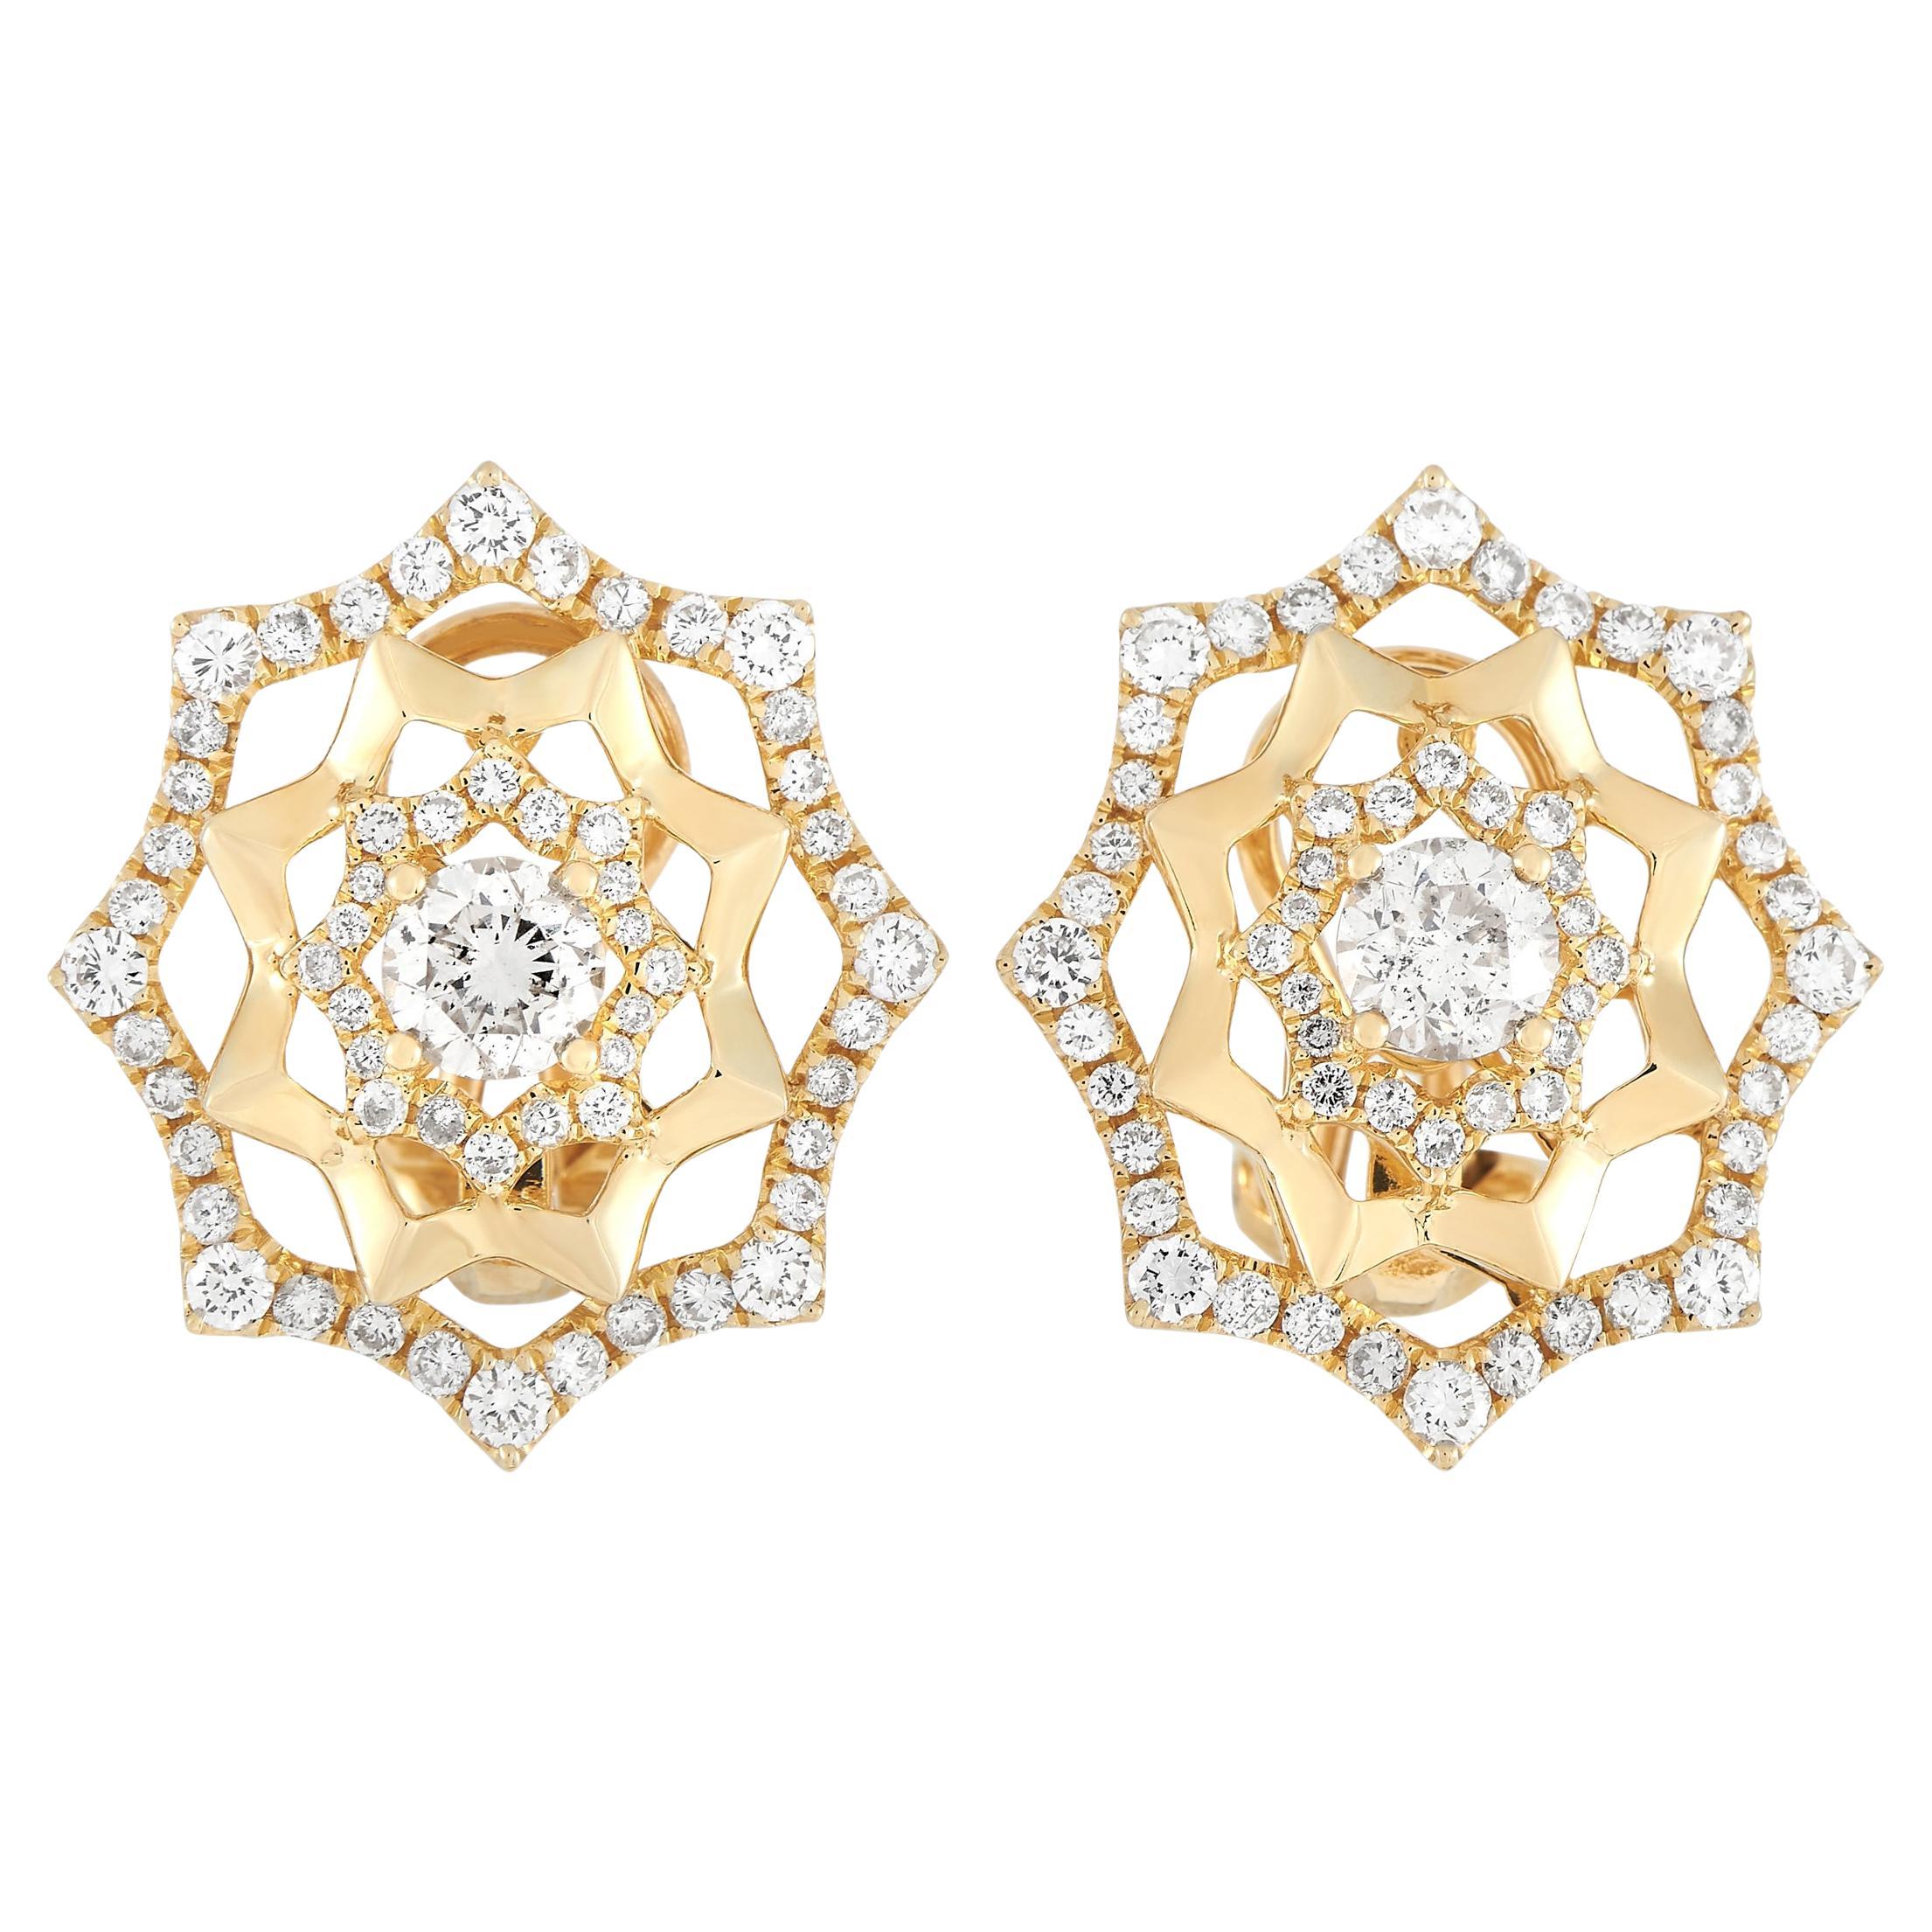 LB Exclusive 18k Yellow 2.40 Carat Diamond Earrings For Sale